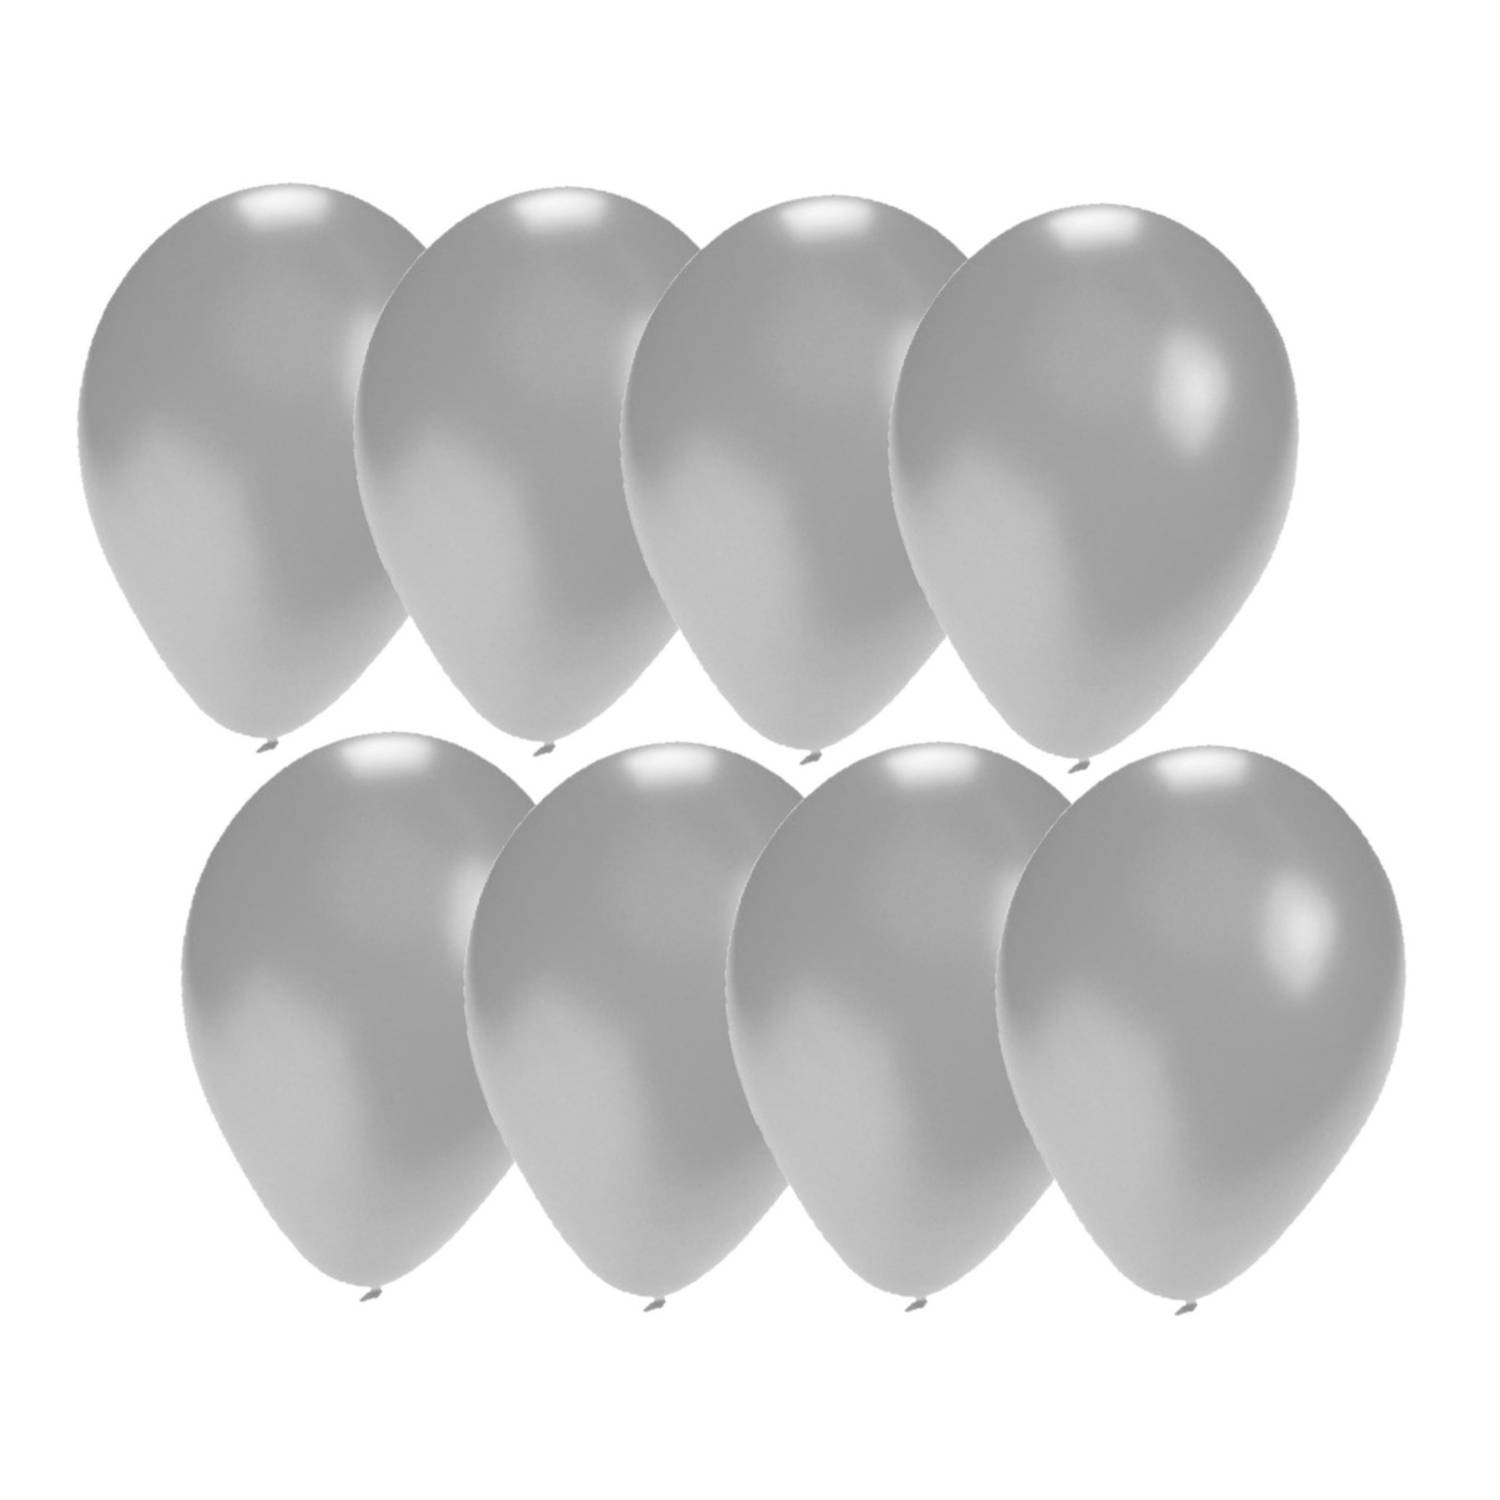 60x stuks zilveren party ballonnen van 27 cm - Ballonnen